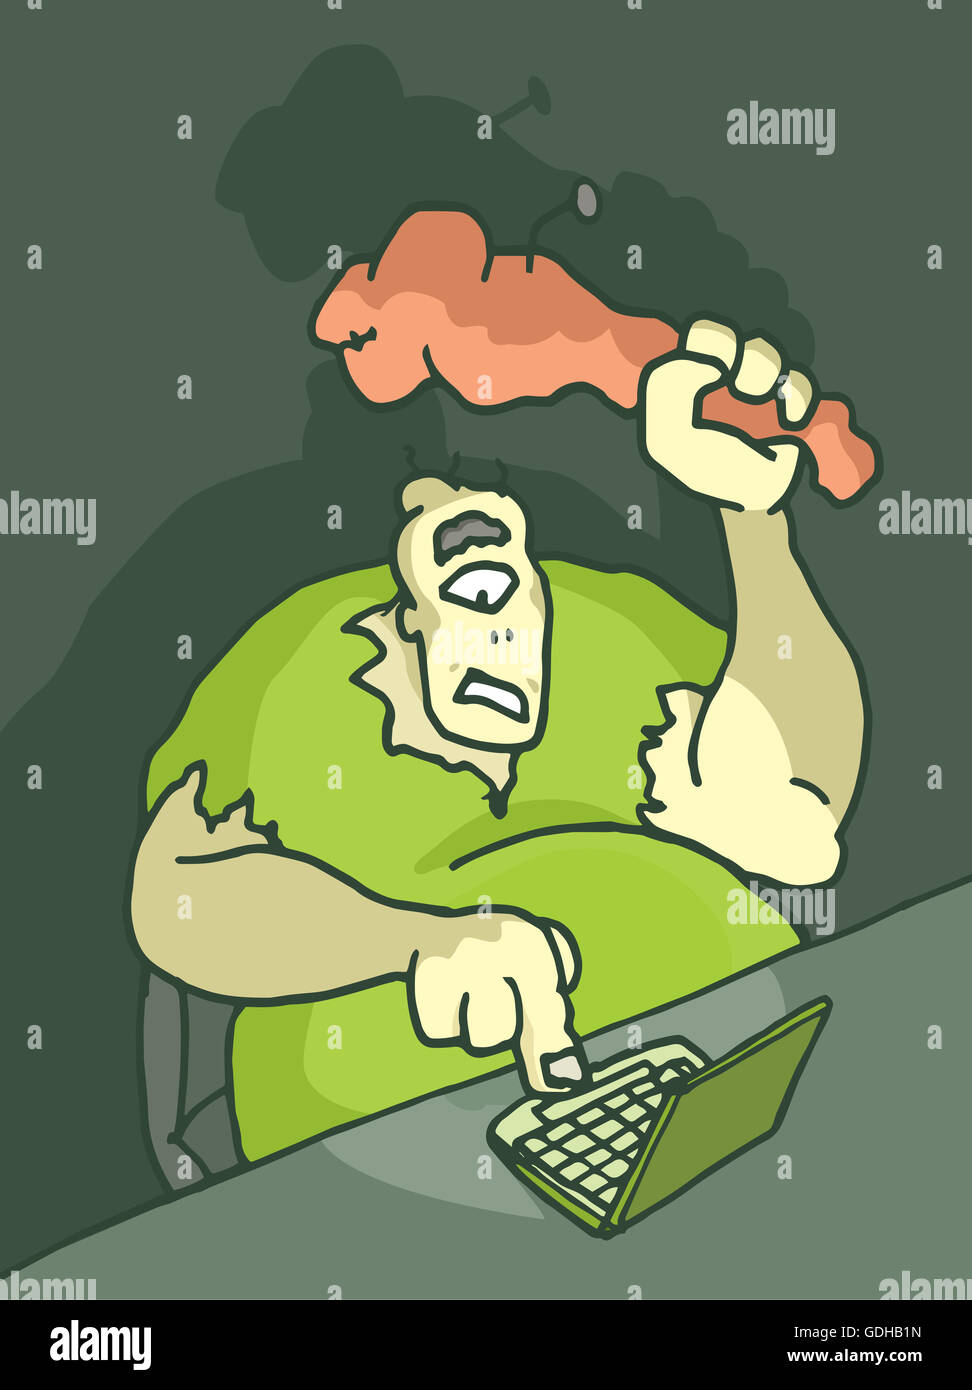 Cartoon illustration d'un troll en face de l'ordinateur à la traîne Banque D'Images